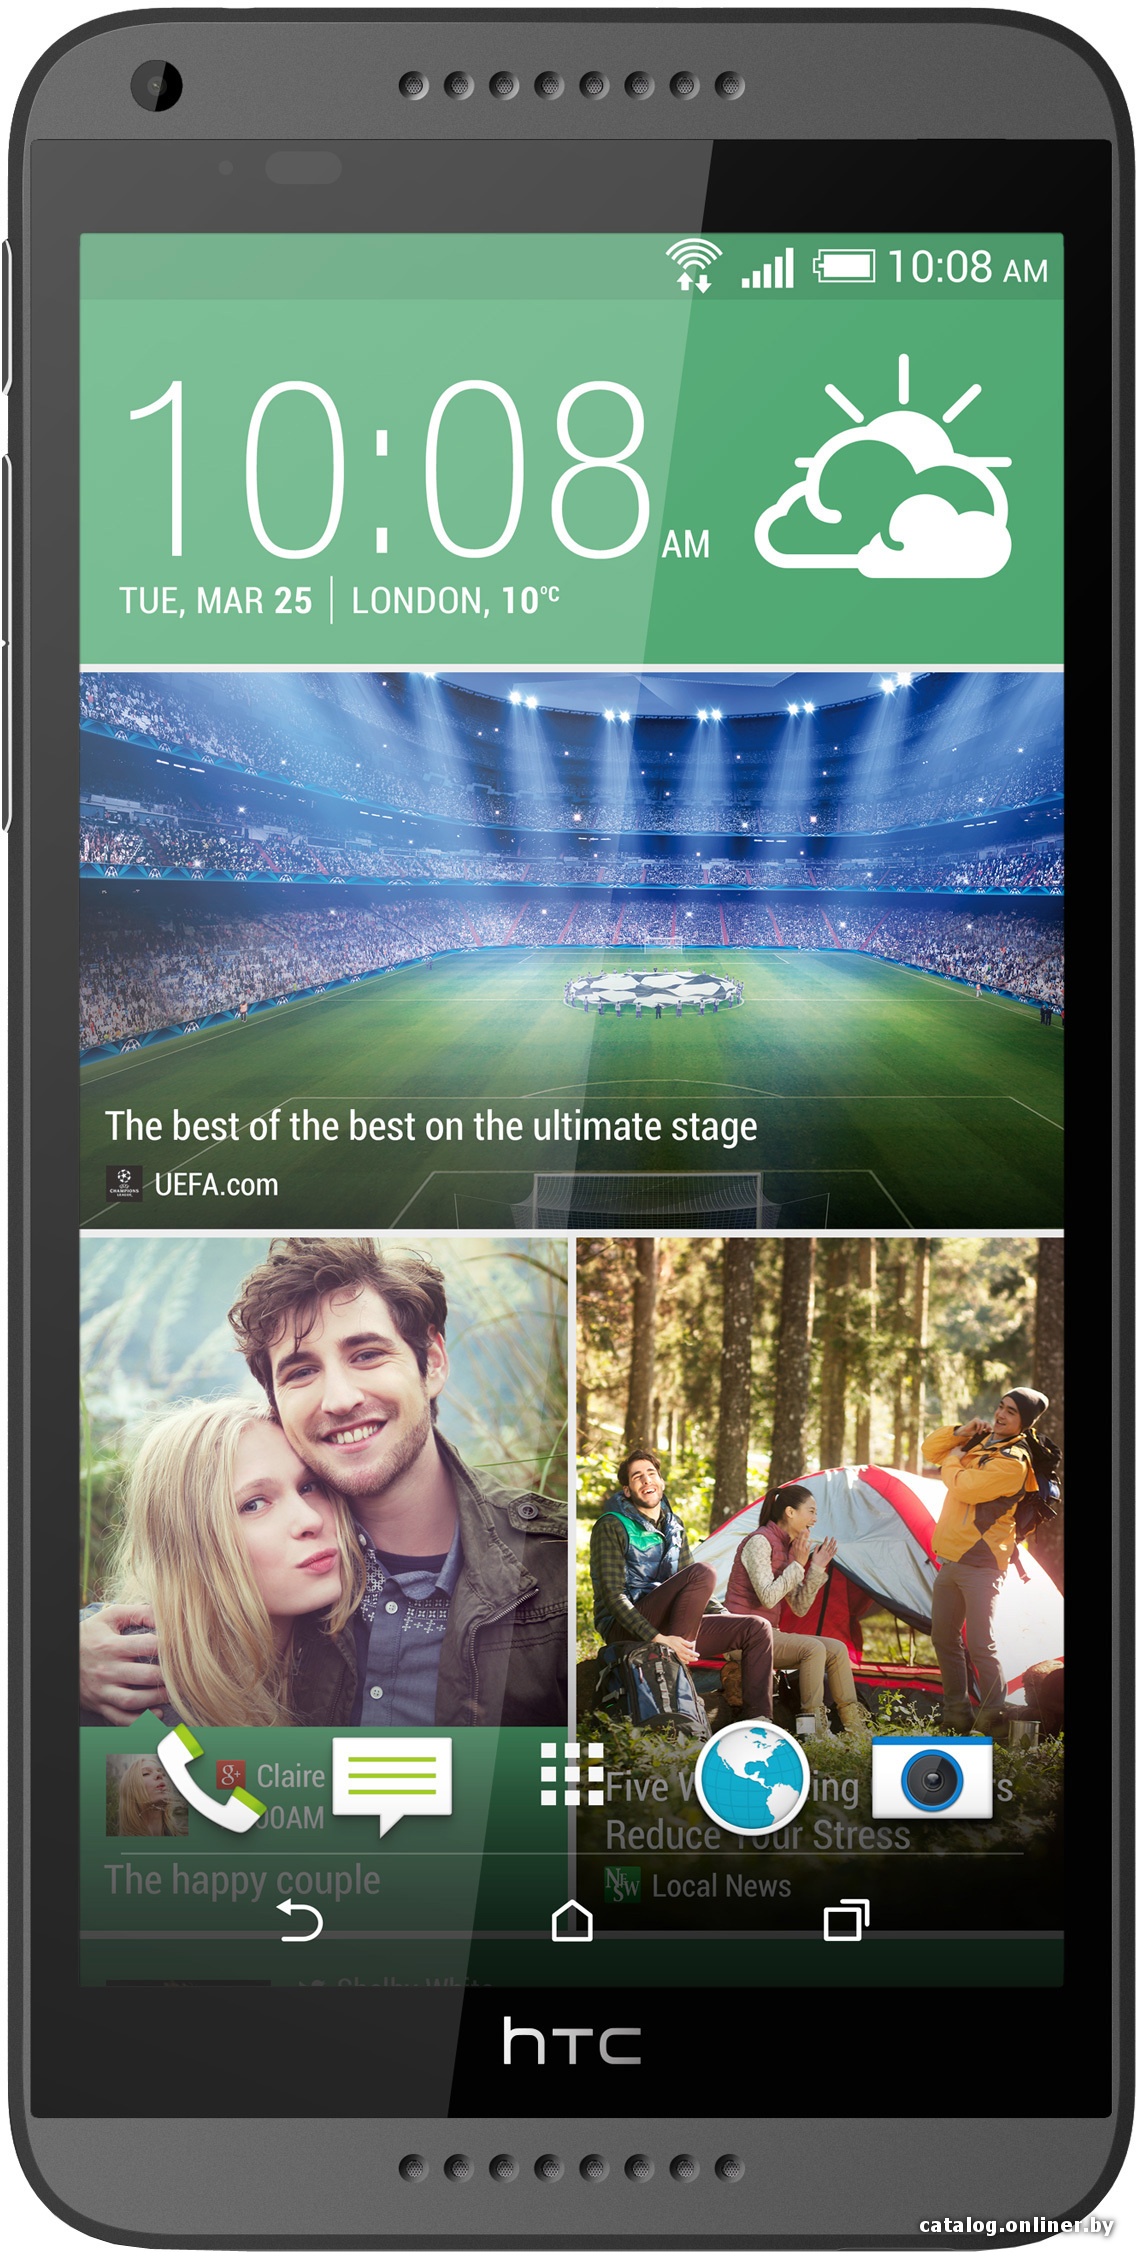 Замена стекла экрана HTC Desire 816